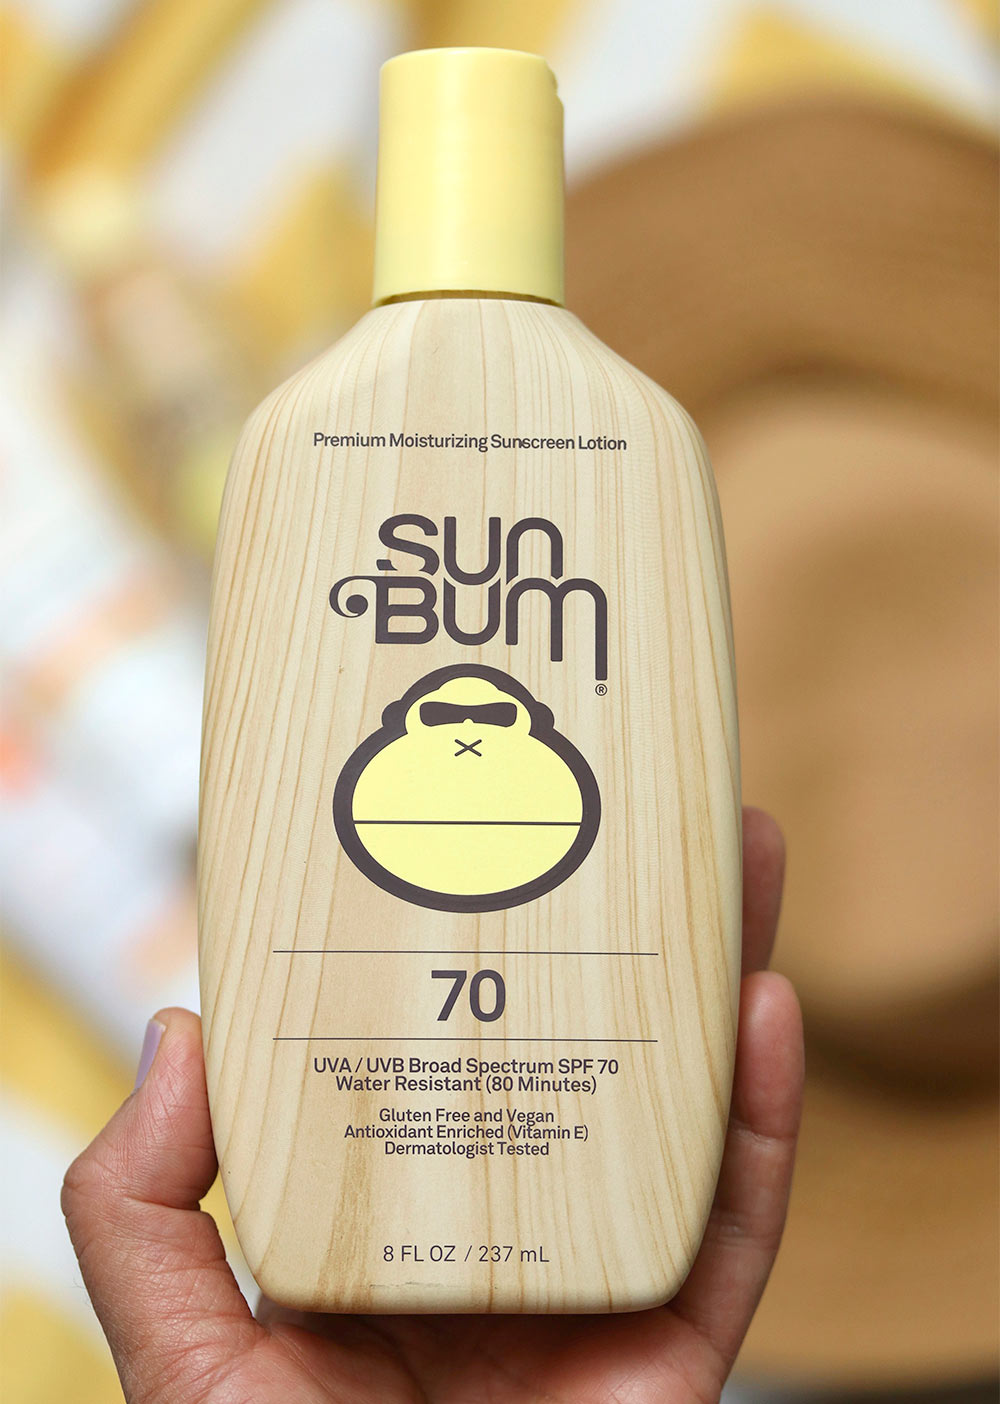 sun bum lotion in hand